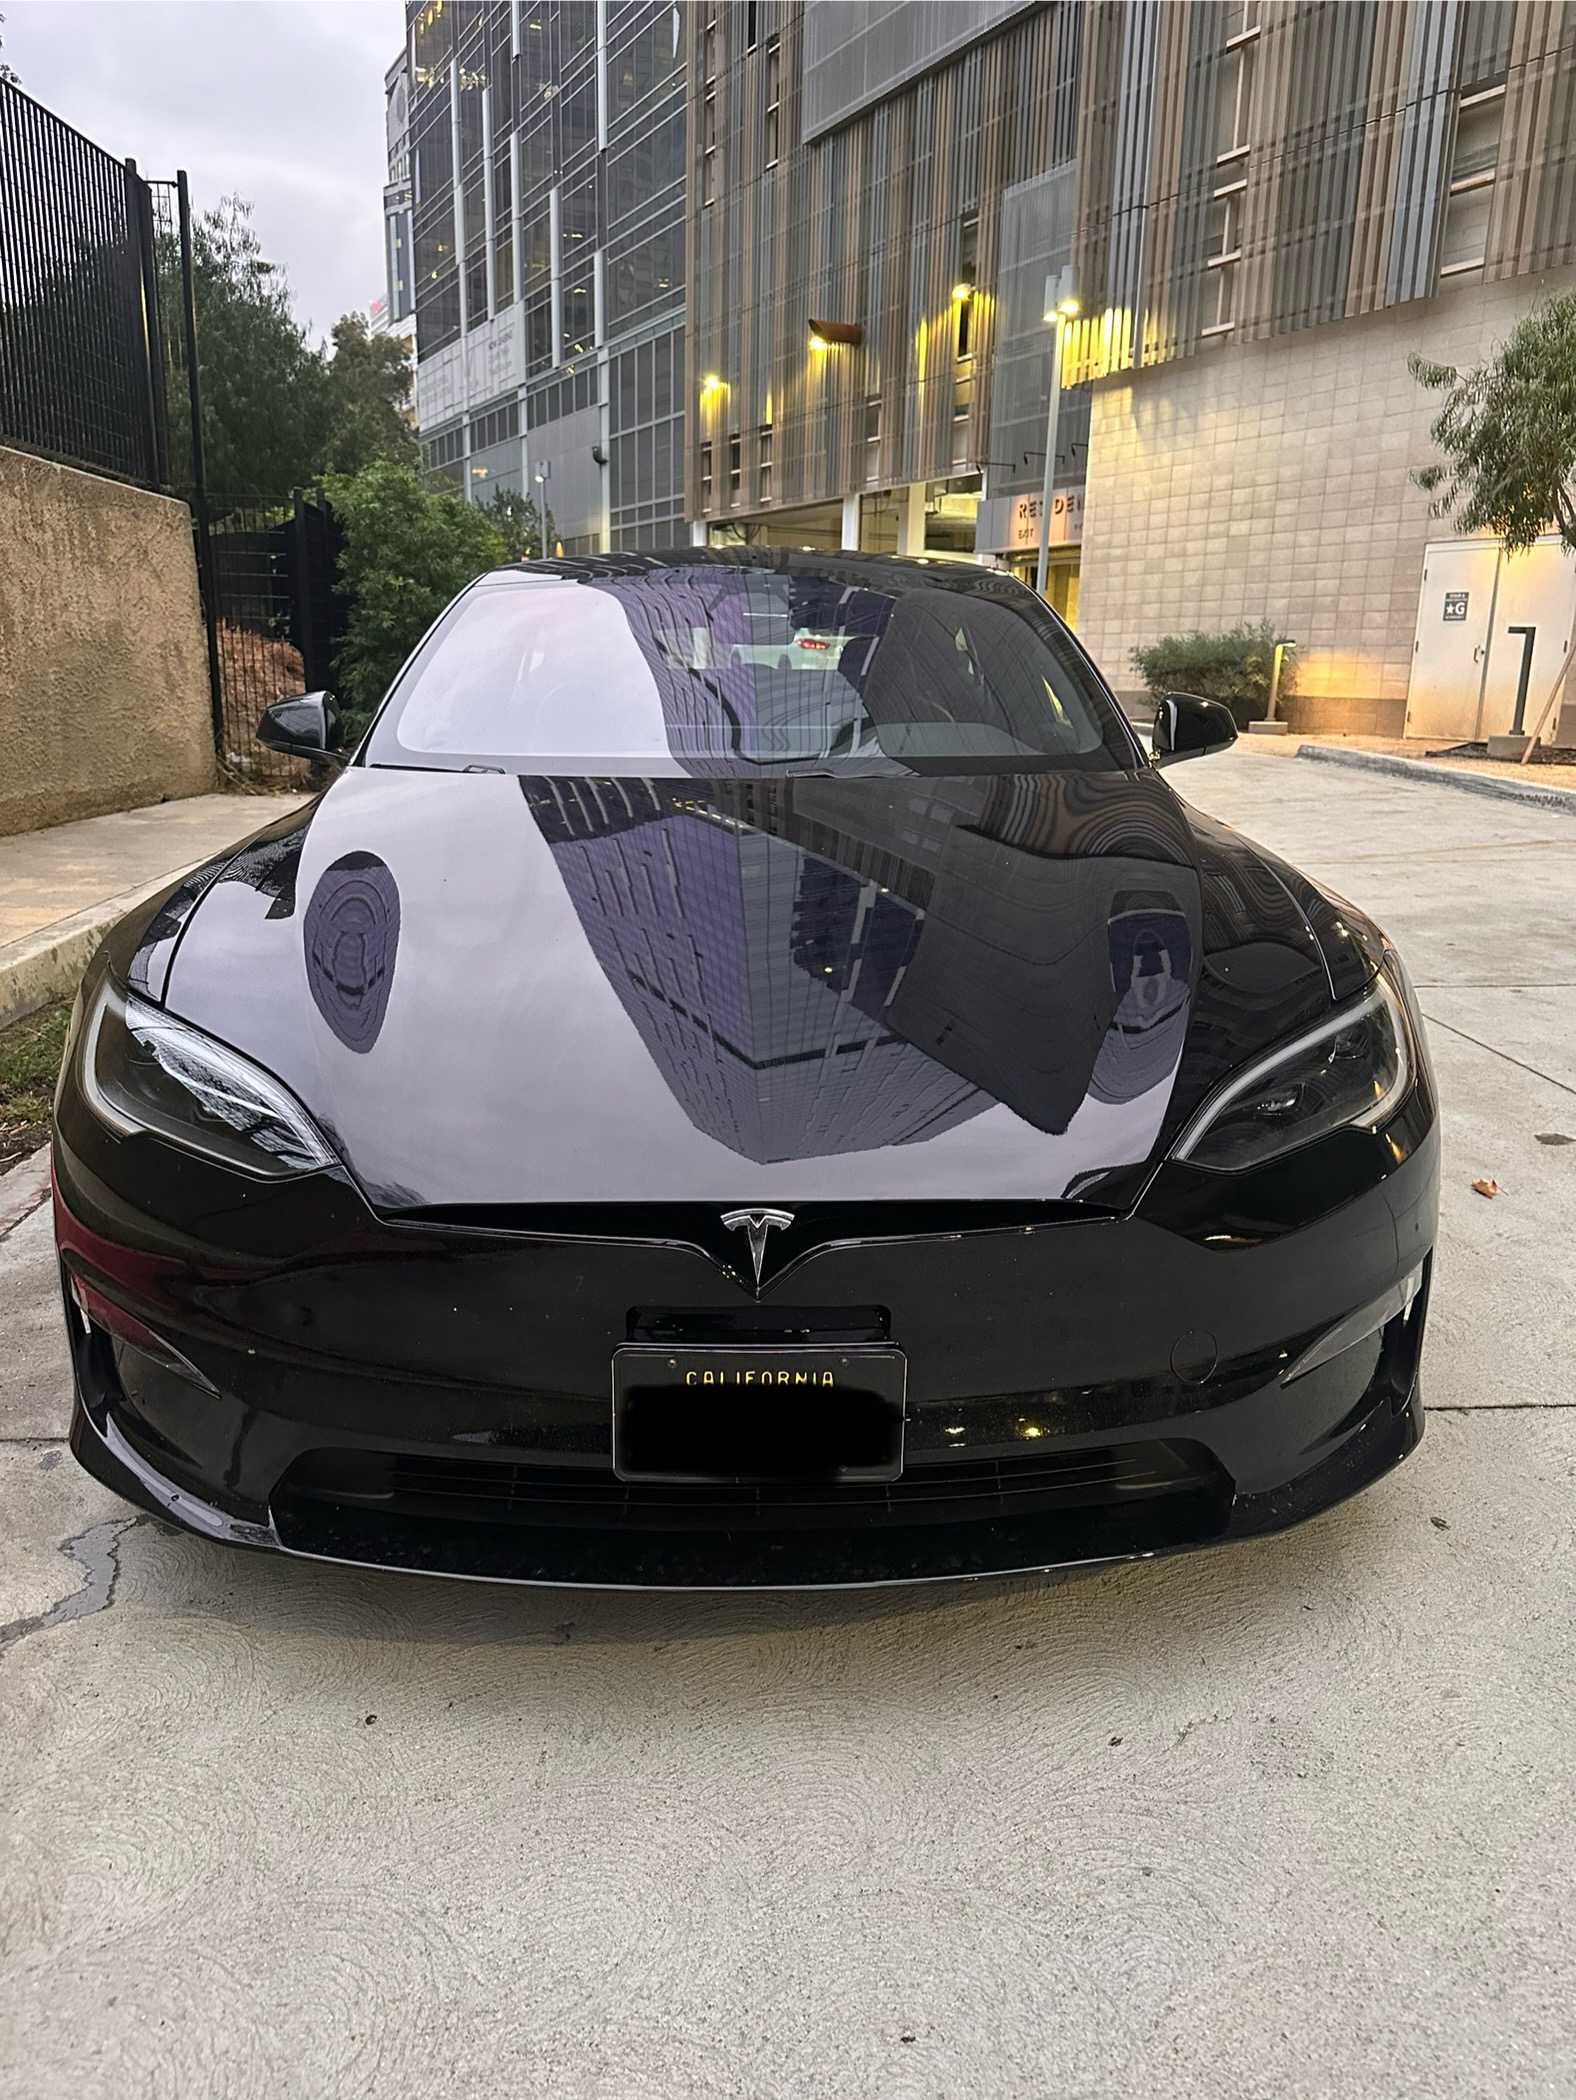 Used Tesla Model S for Sale in Los Angeles, CA - Autotrader